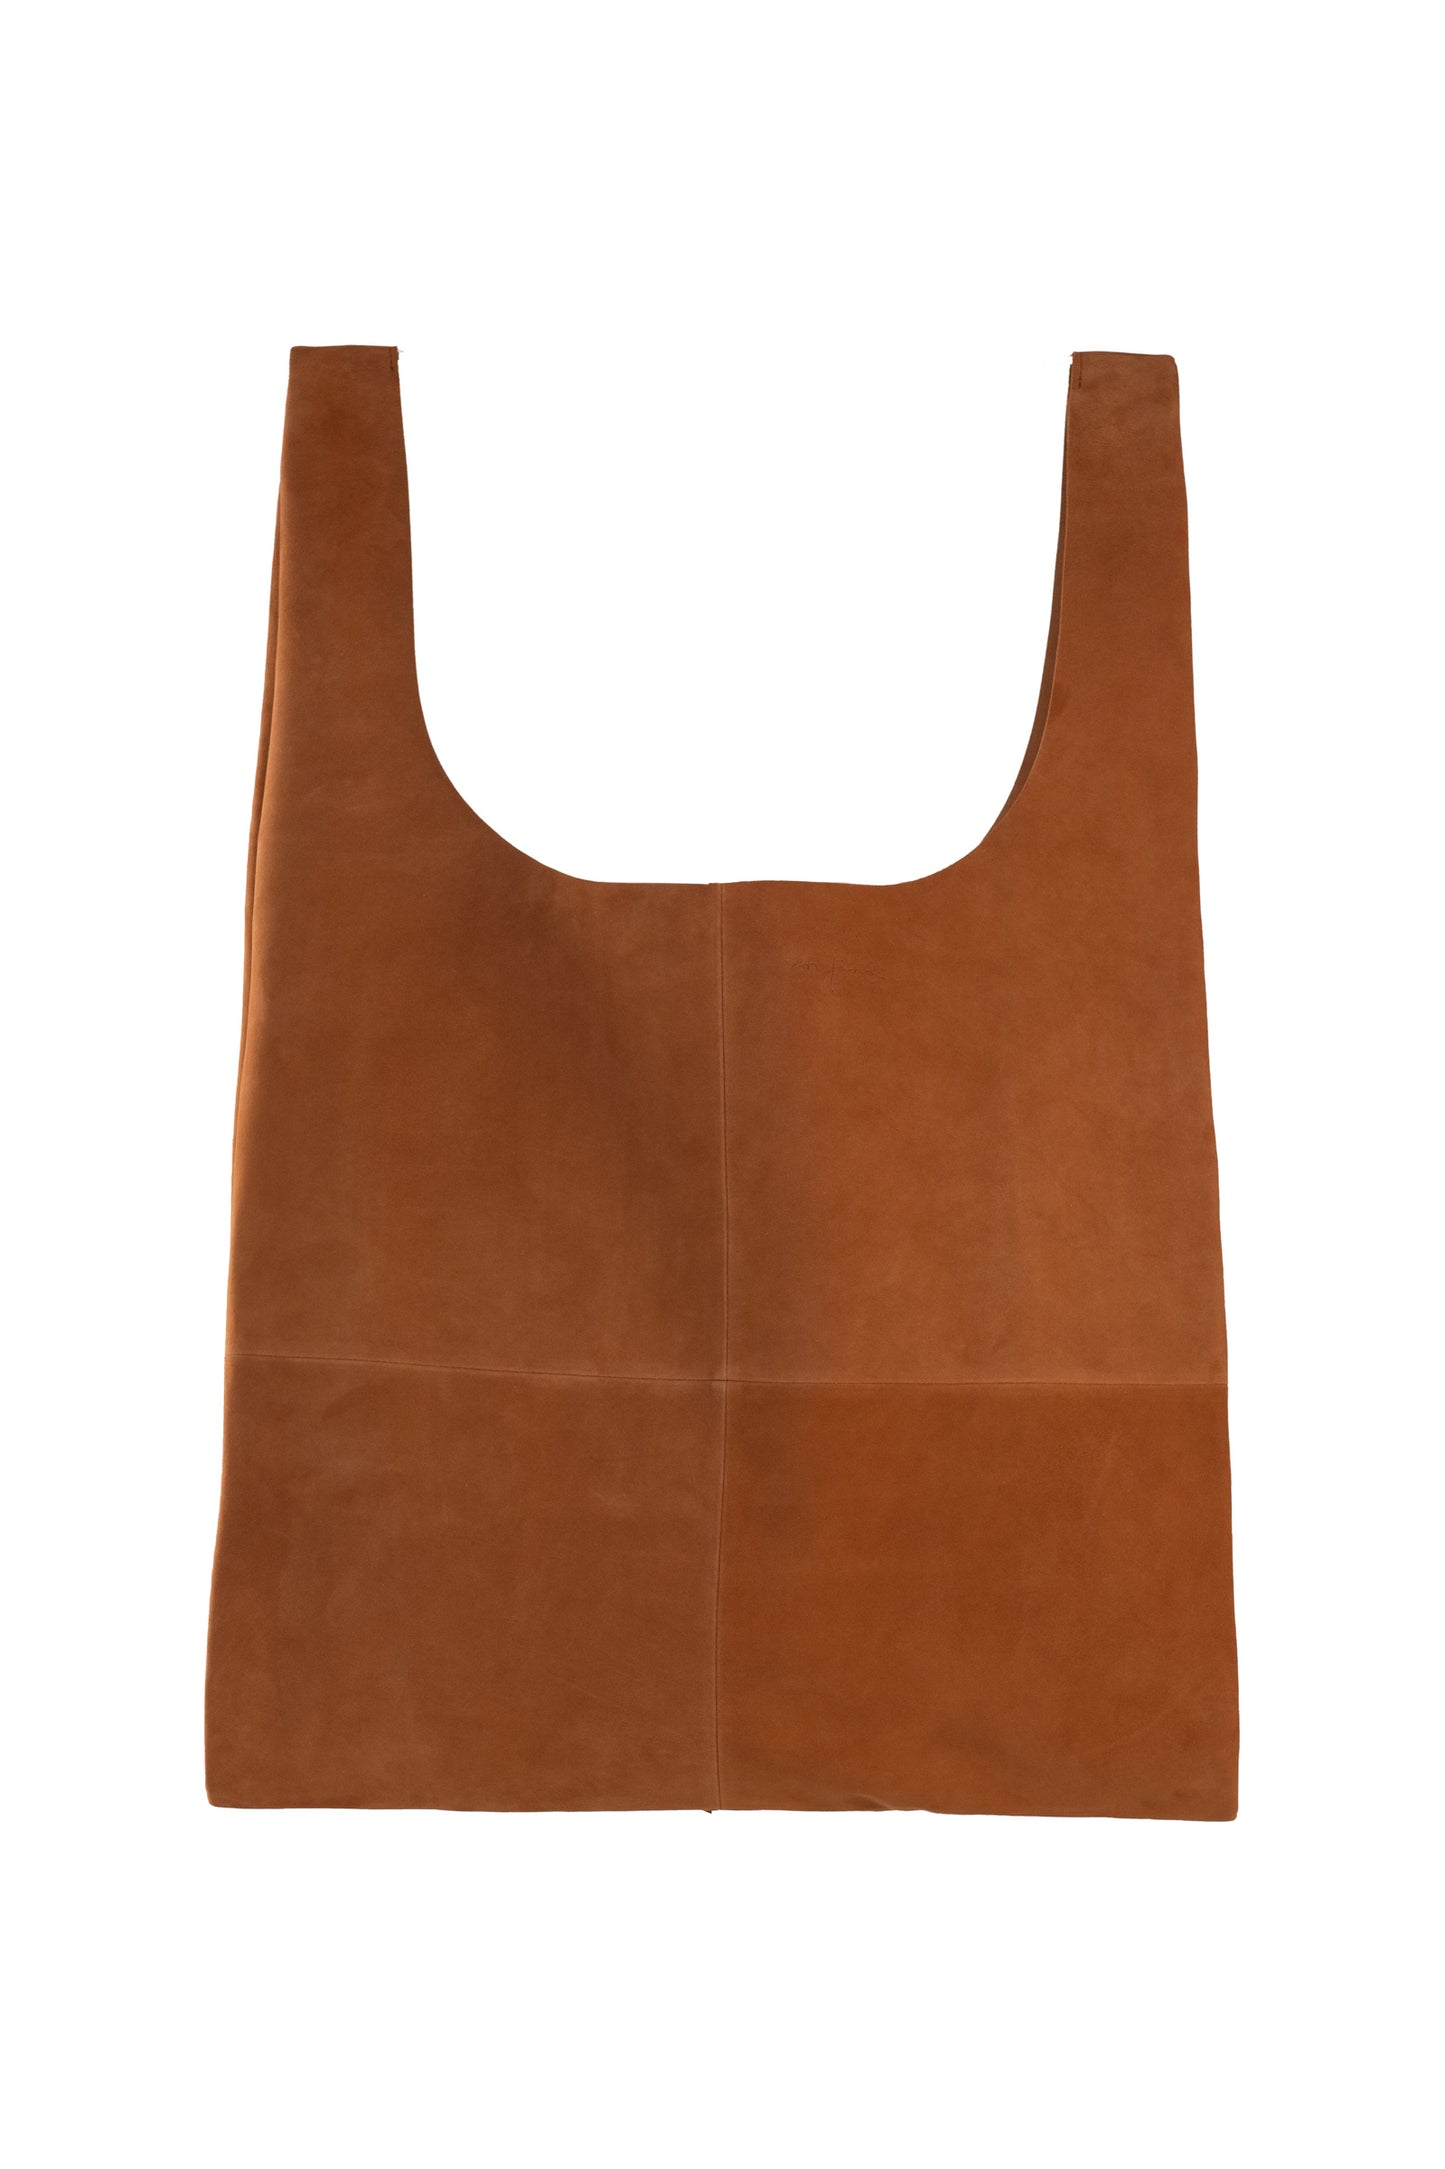 U XL, brown suede bag